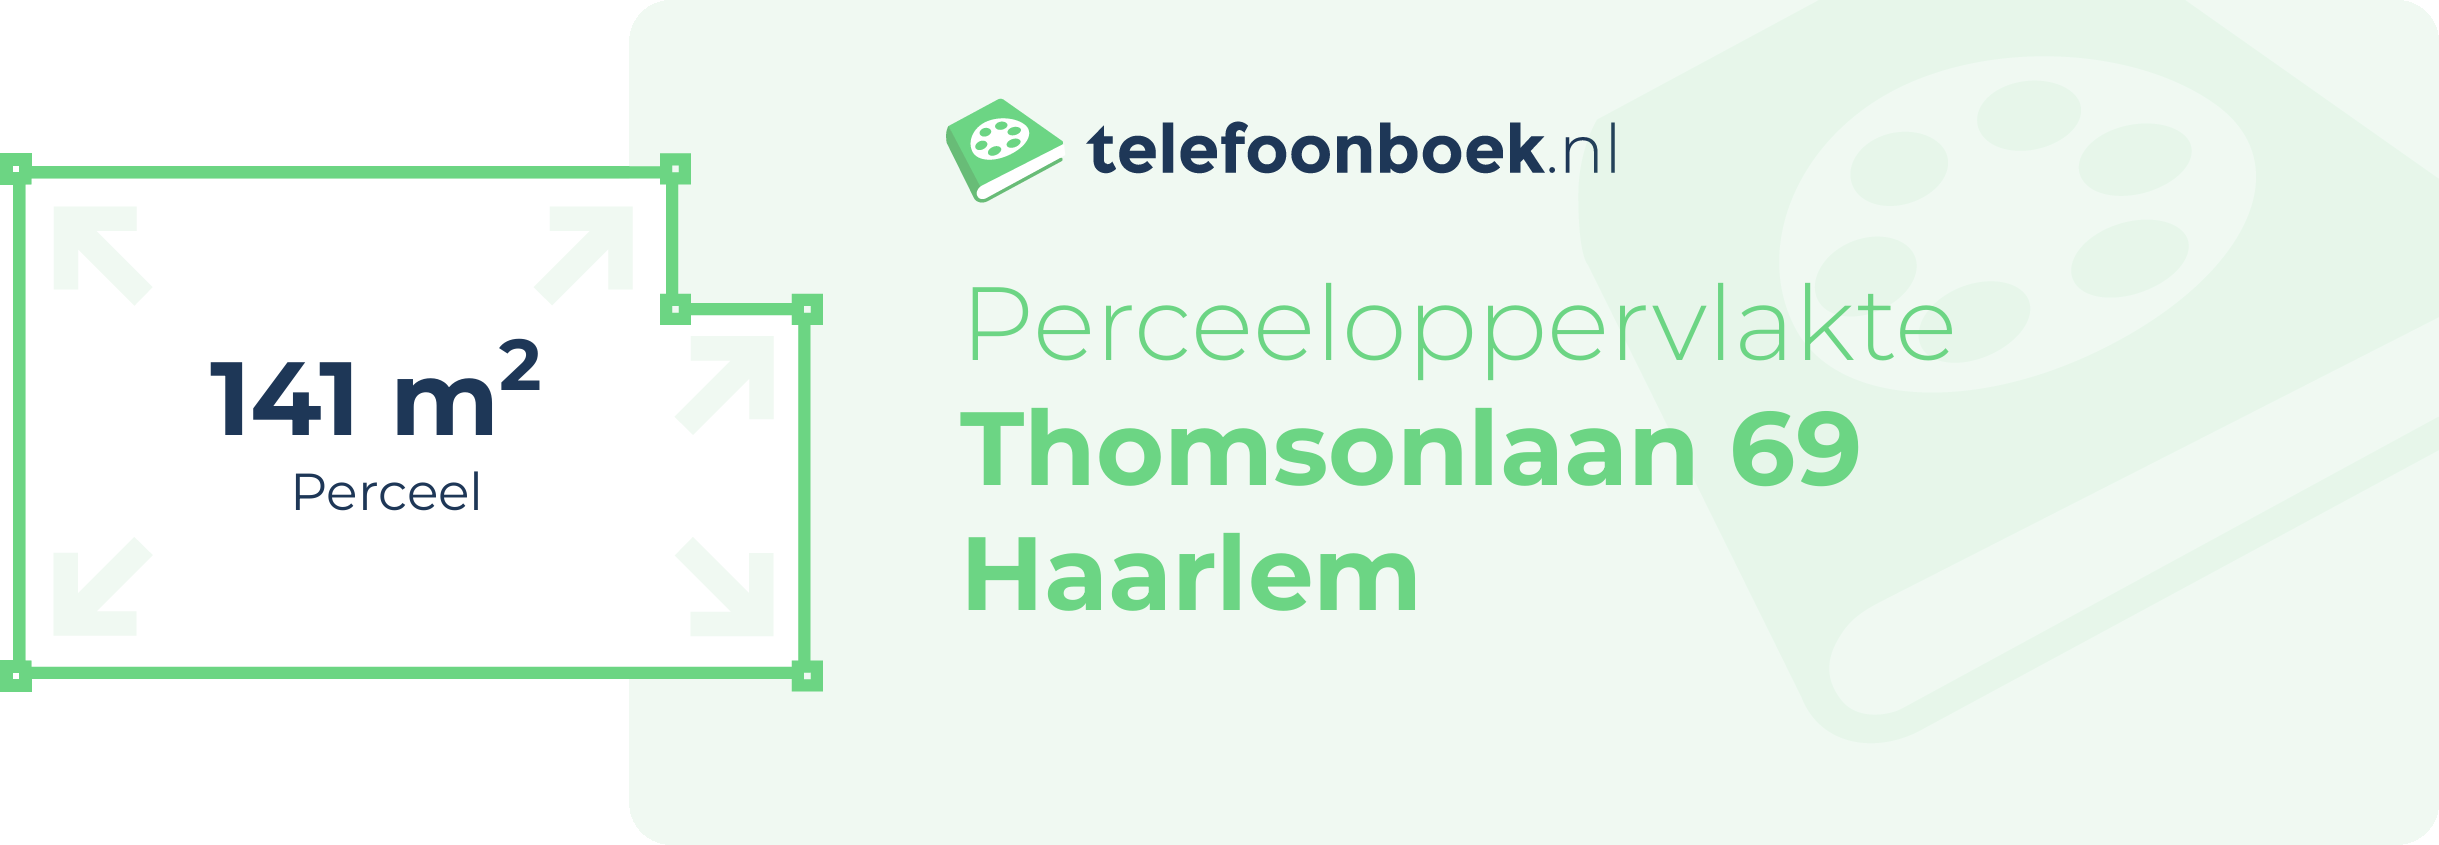 Perceeloppervlakte Thomsonlaan 69 Haarlem